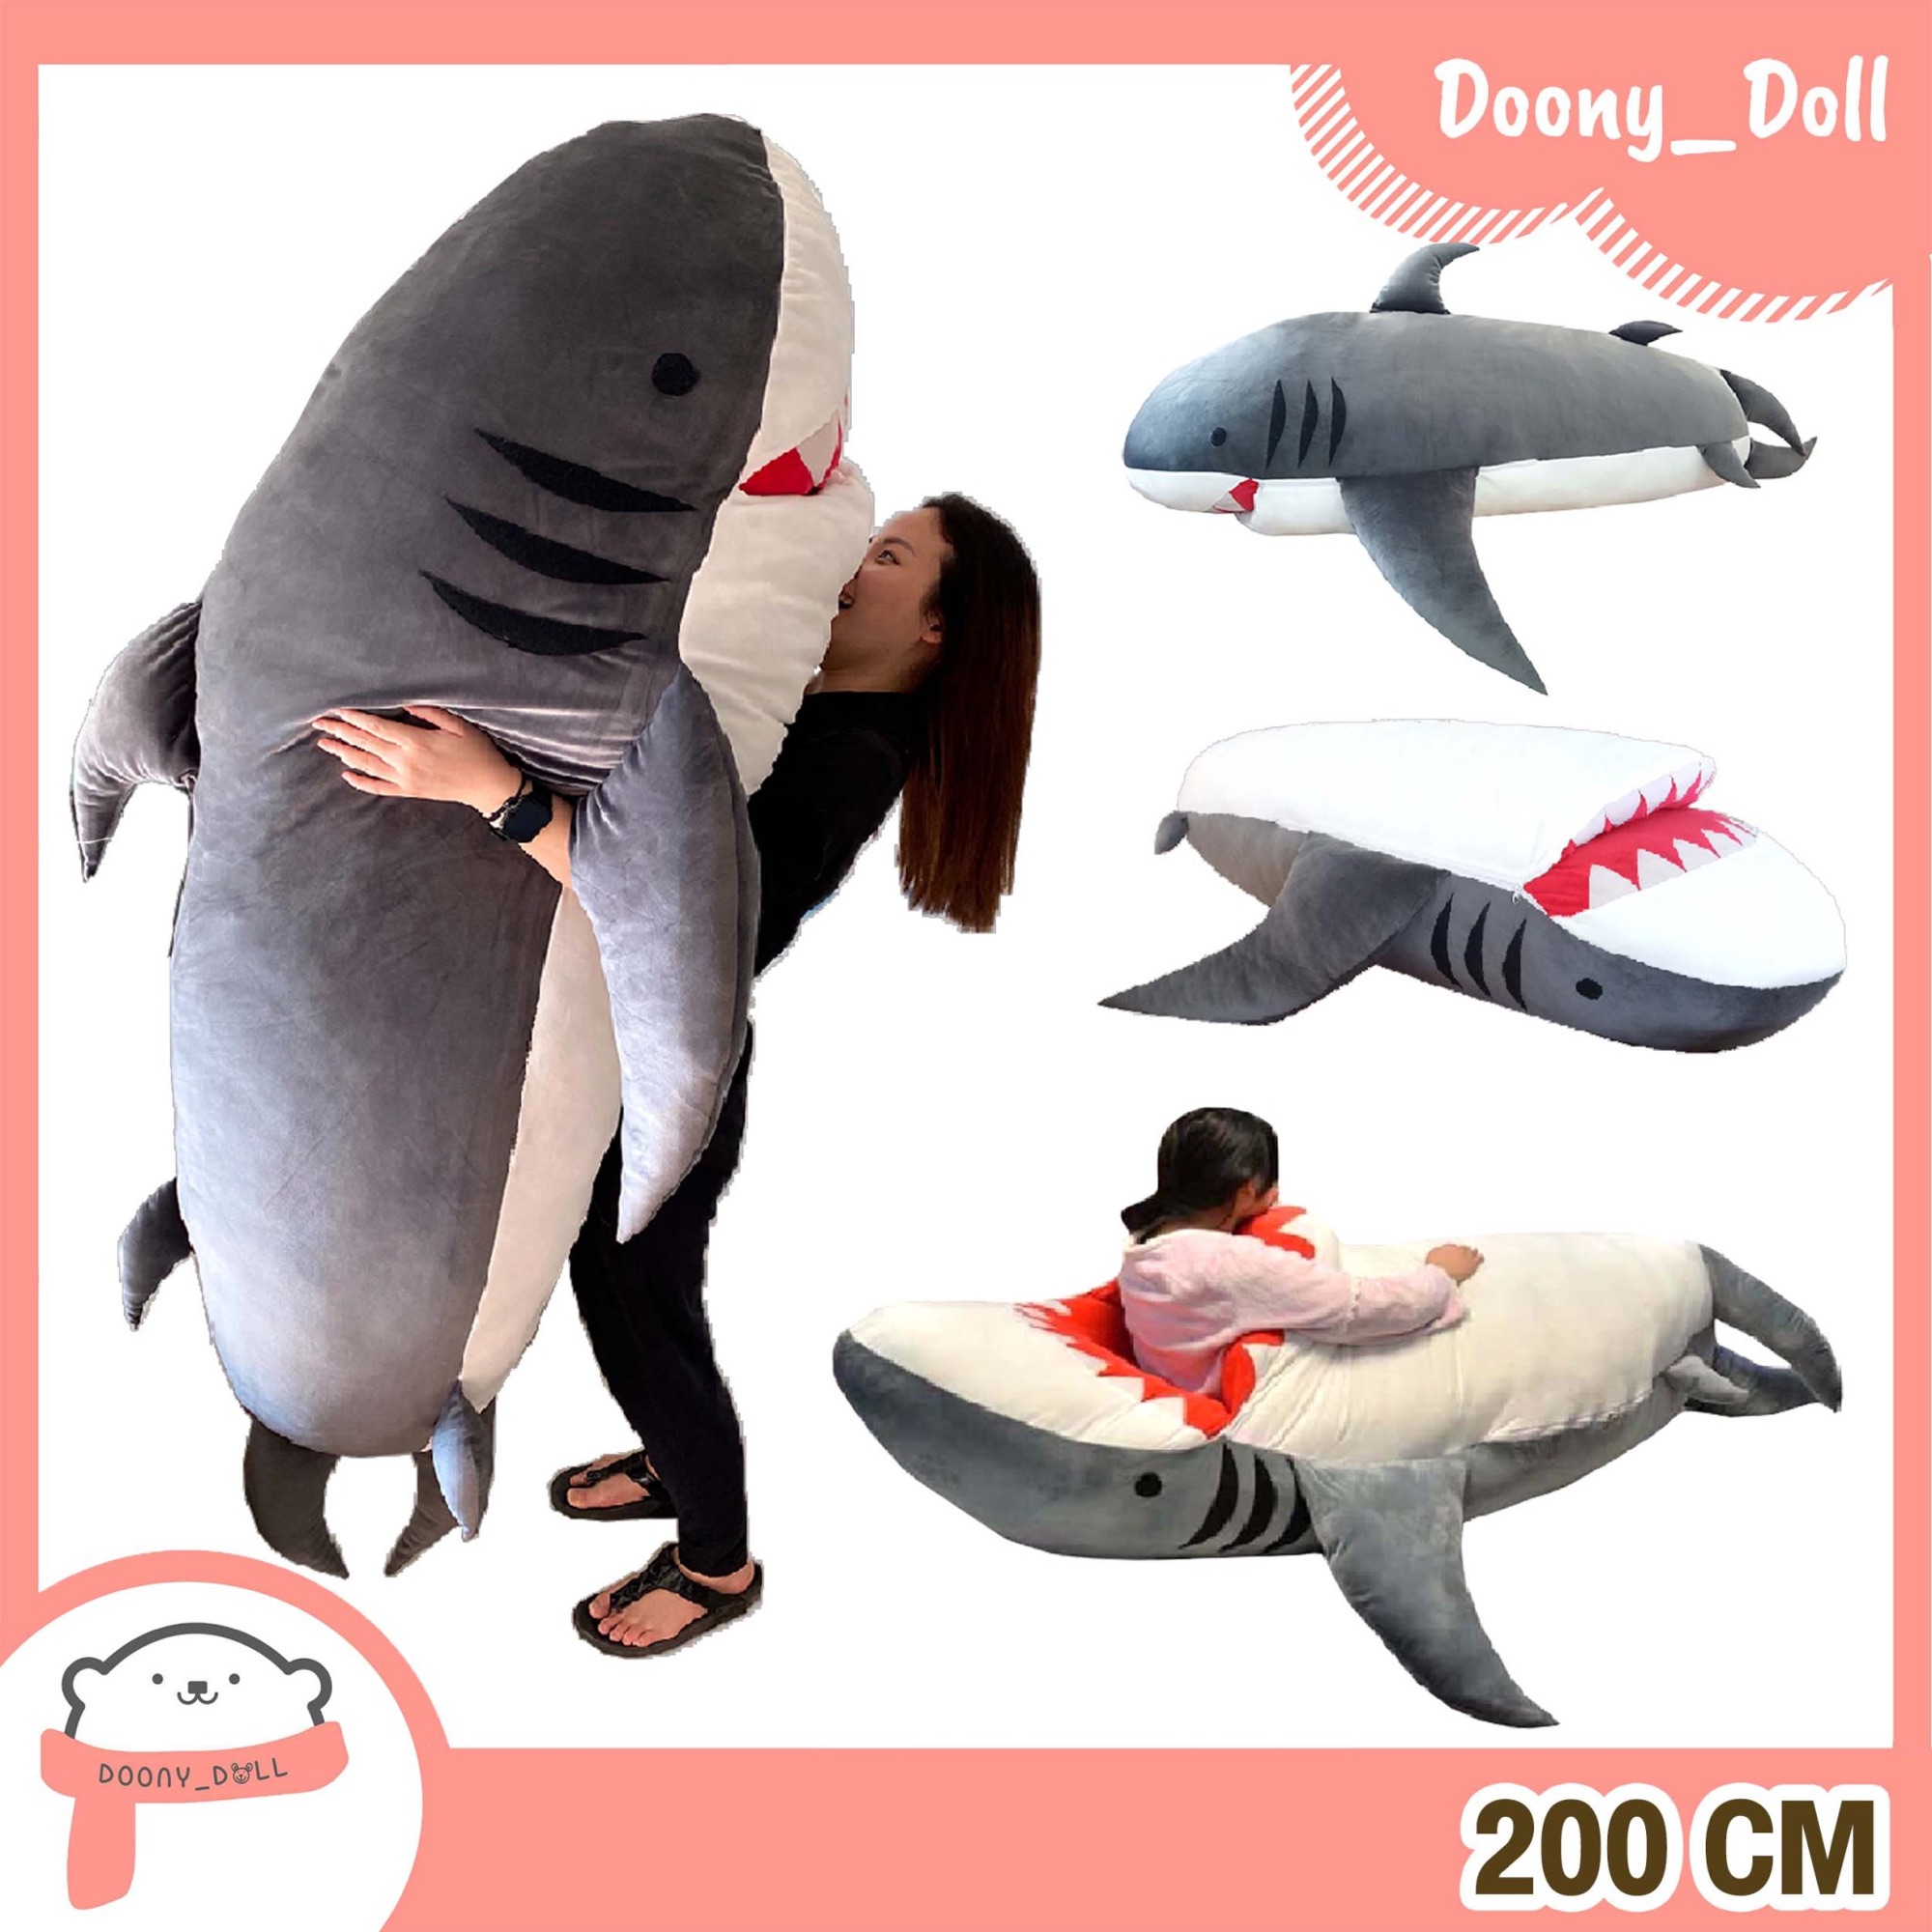 Doony_doll ตุ๊กตาฉลามยักษ์ 200cm ที่นอนฉลามยักษ์ ถุงนอนฉลามยักษ์ #ตุ๊กตาตัวใหญ่ๆ ของขวัญปัจฉิม ของขวัญให้แฟน